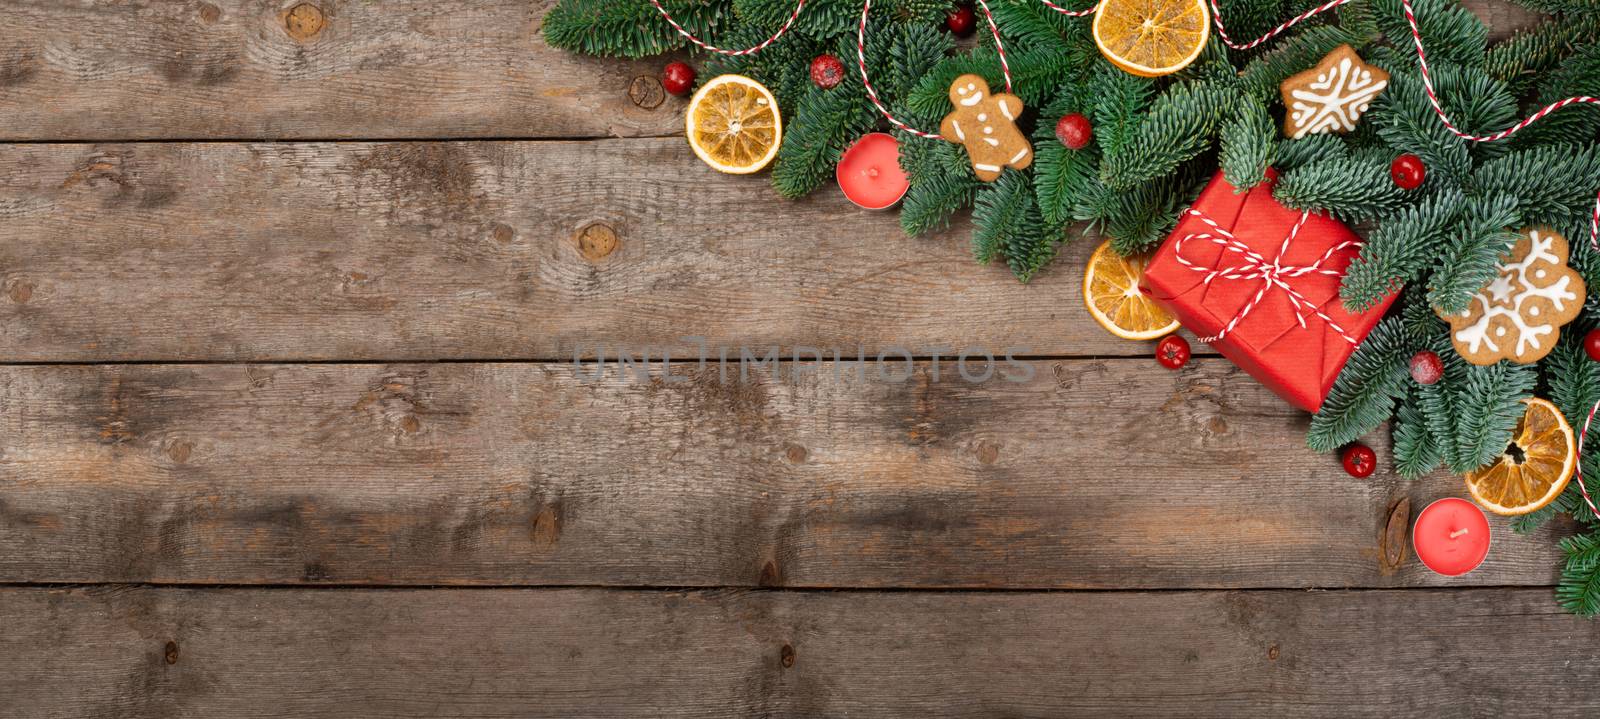 Christmas gift and fir branches by destillat